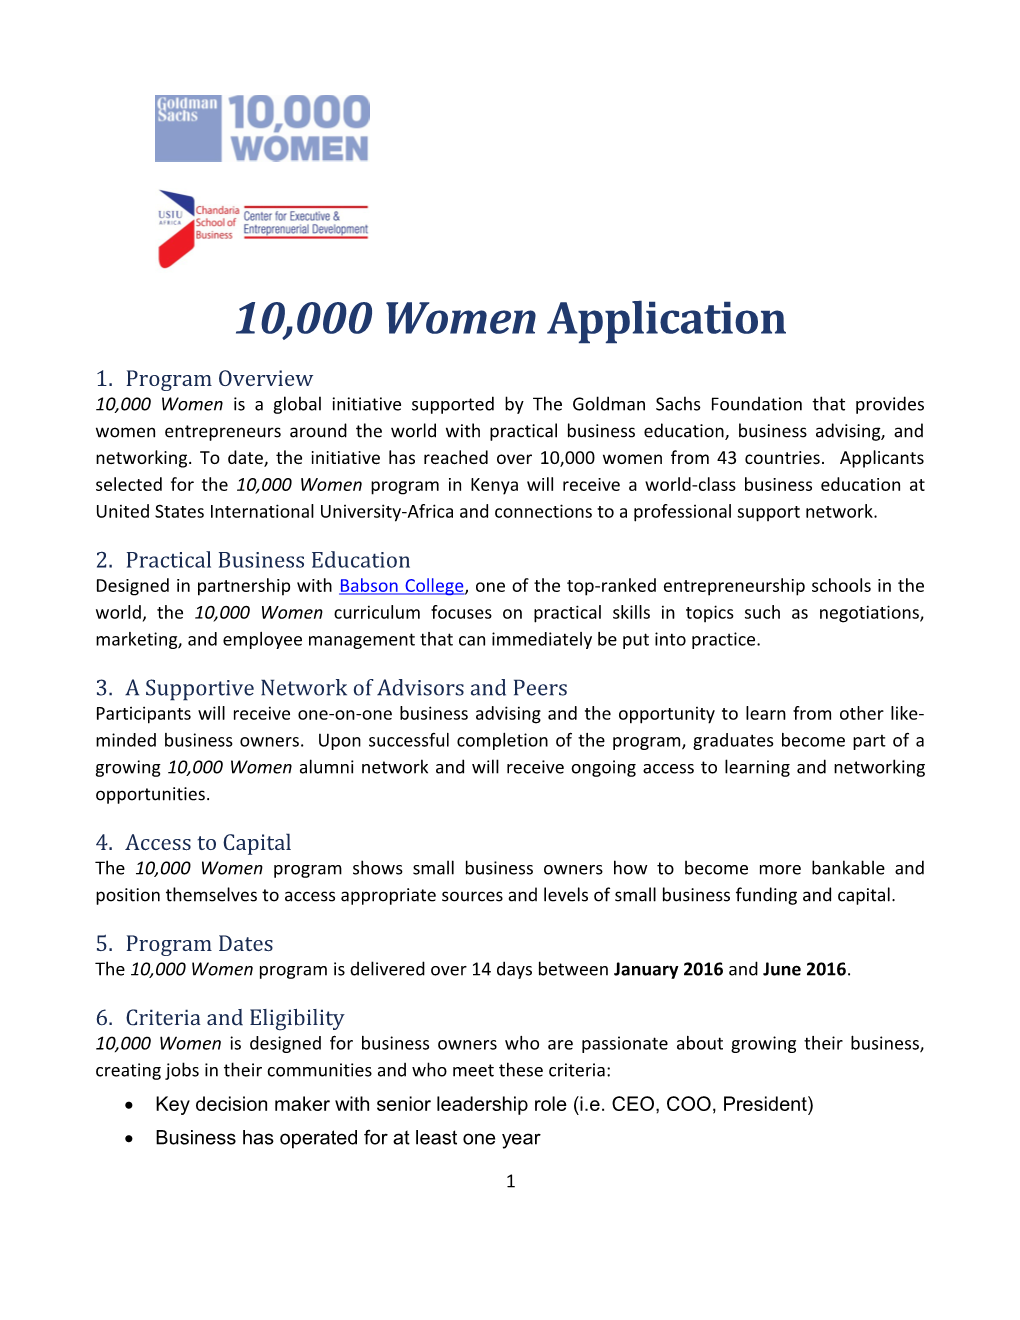 Goldman Sachs 10 000 Women USIU-Africa Application Form